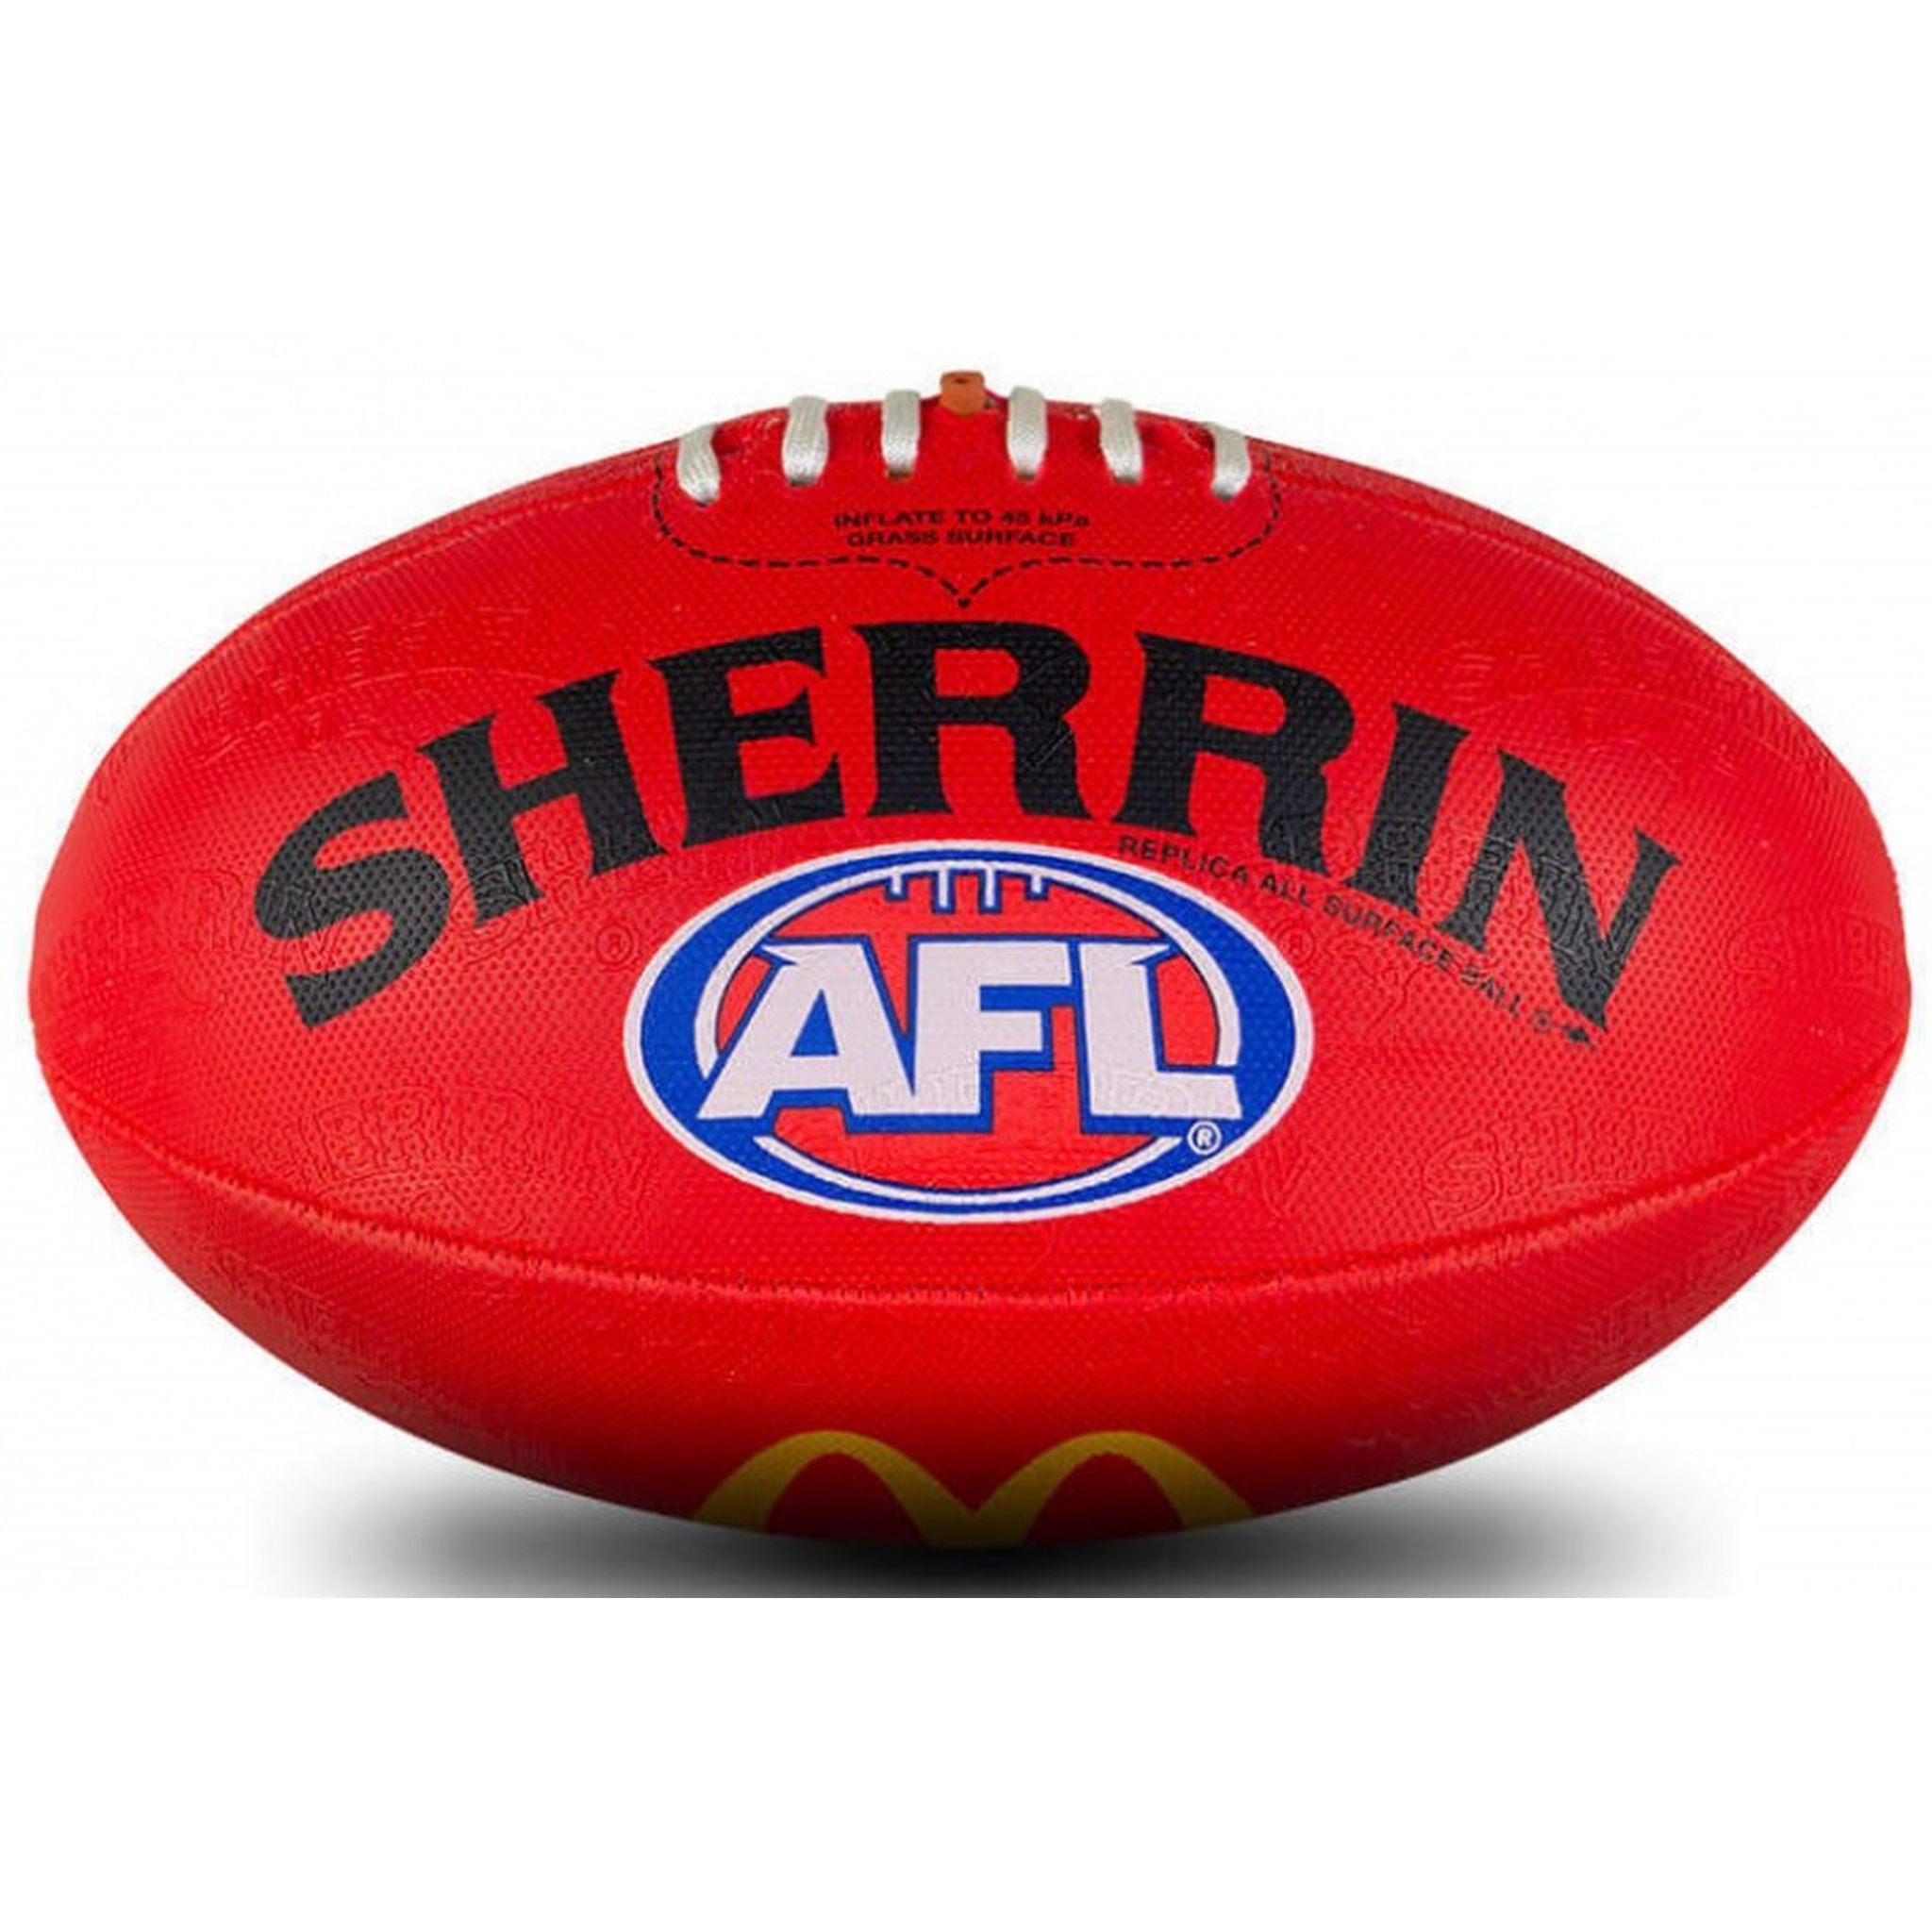 Sherrin AFL MC Synthetic All Surface Football